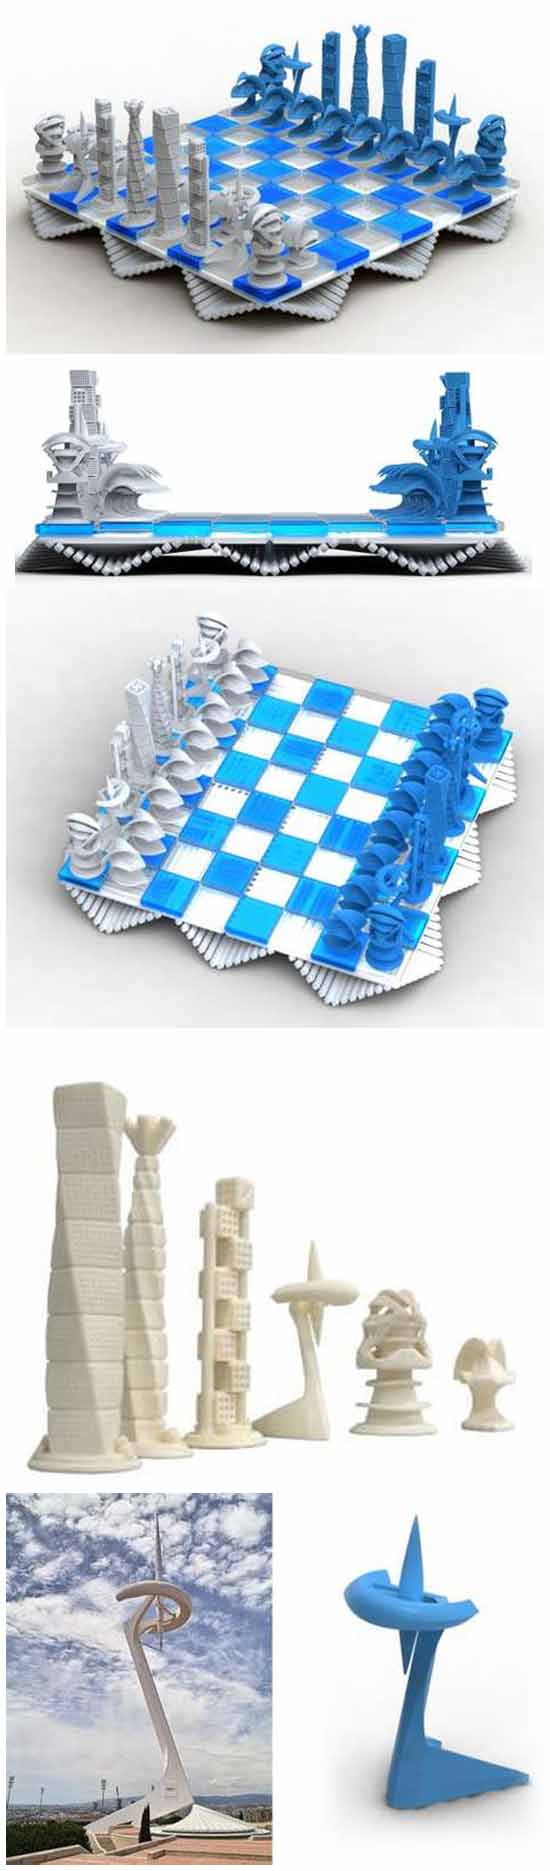 Архитектурные шахматы